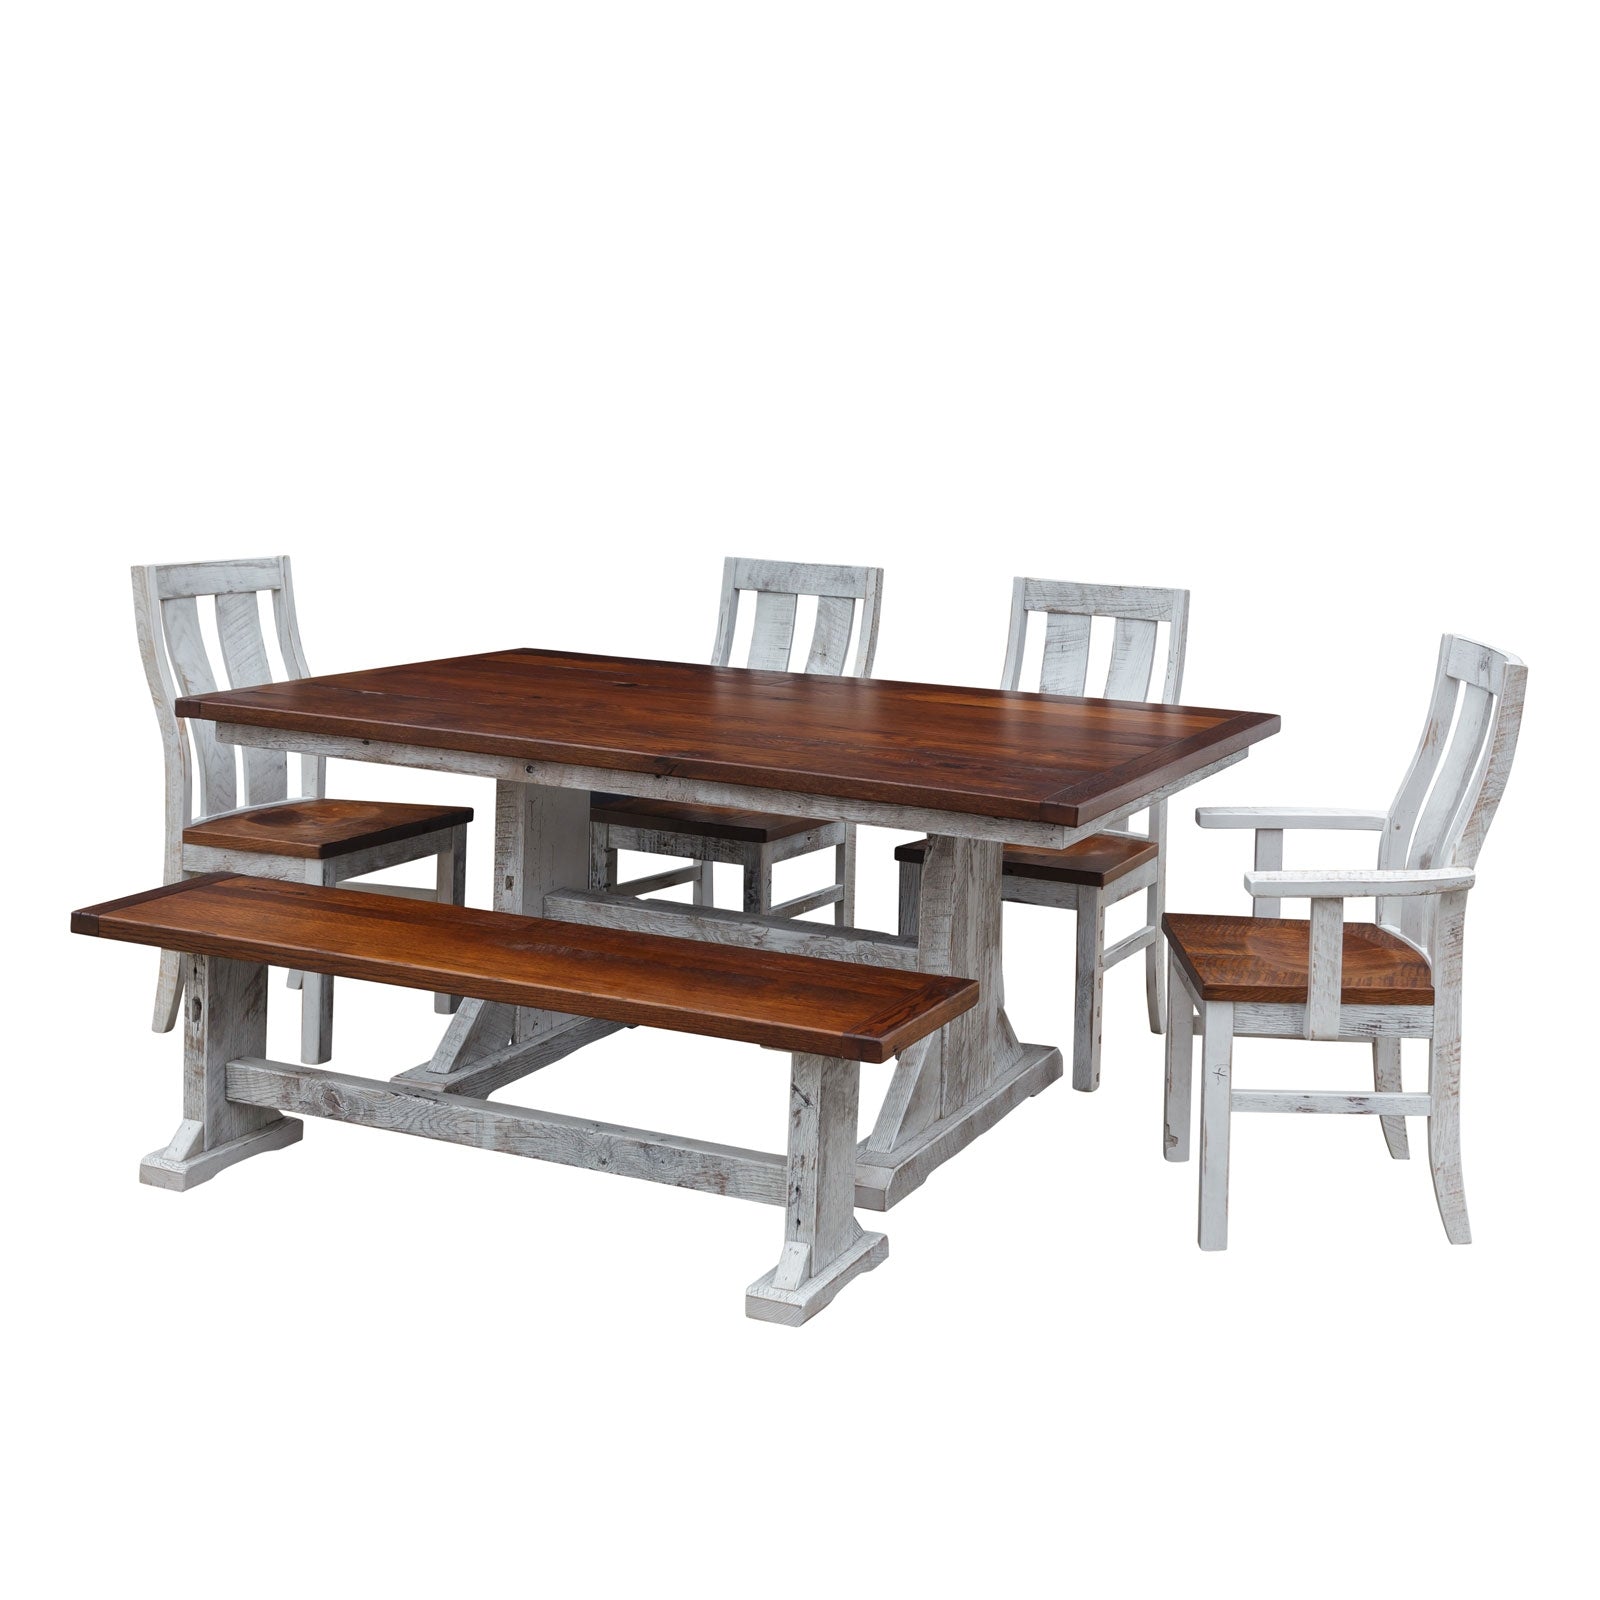 Silverton Barnwood Trestle Table - snyders.furniture